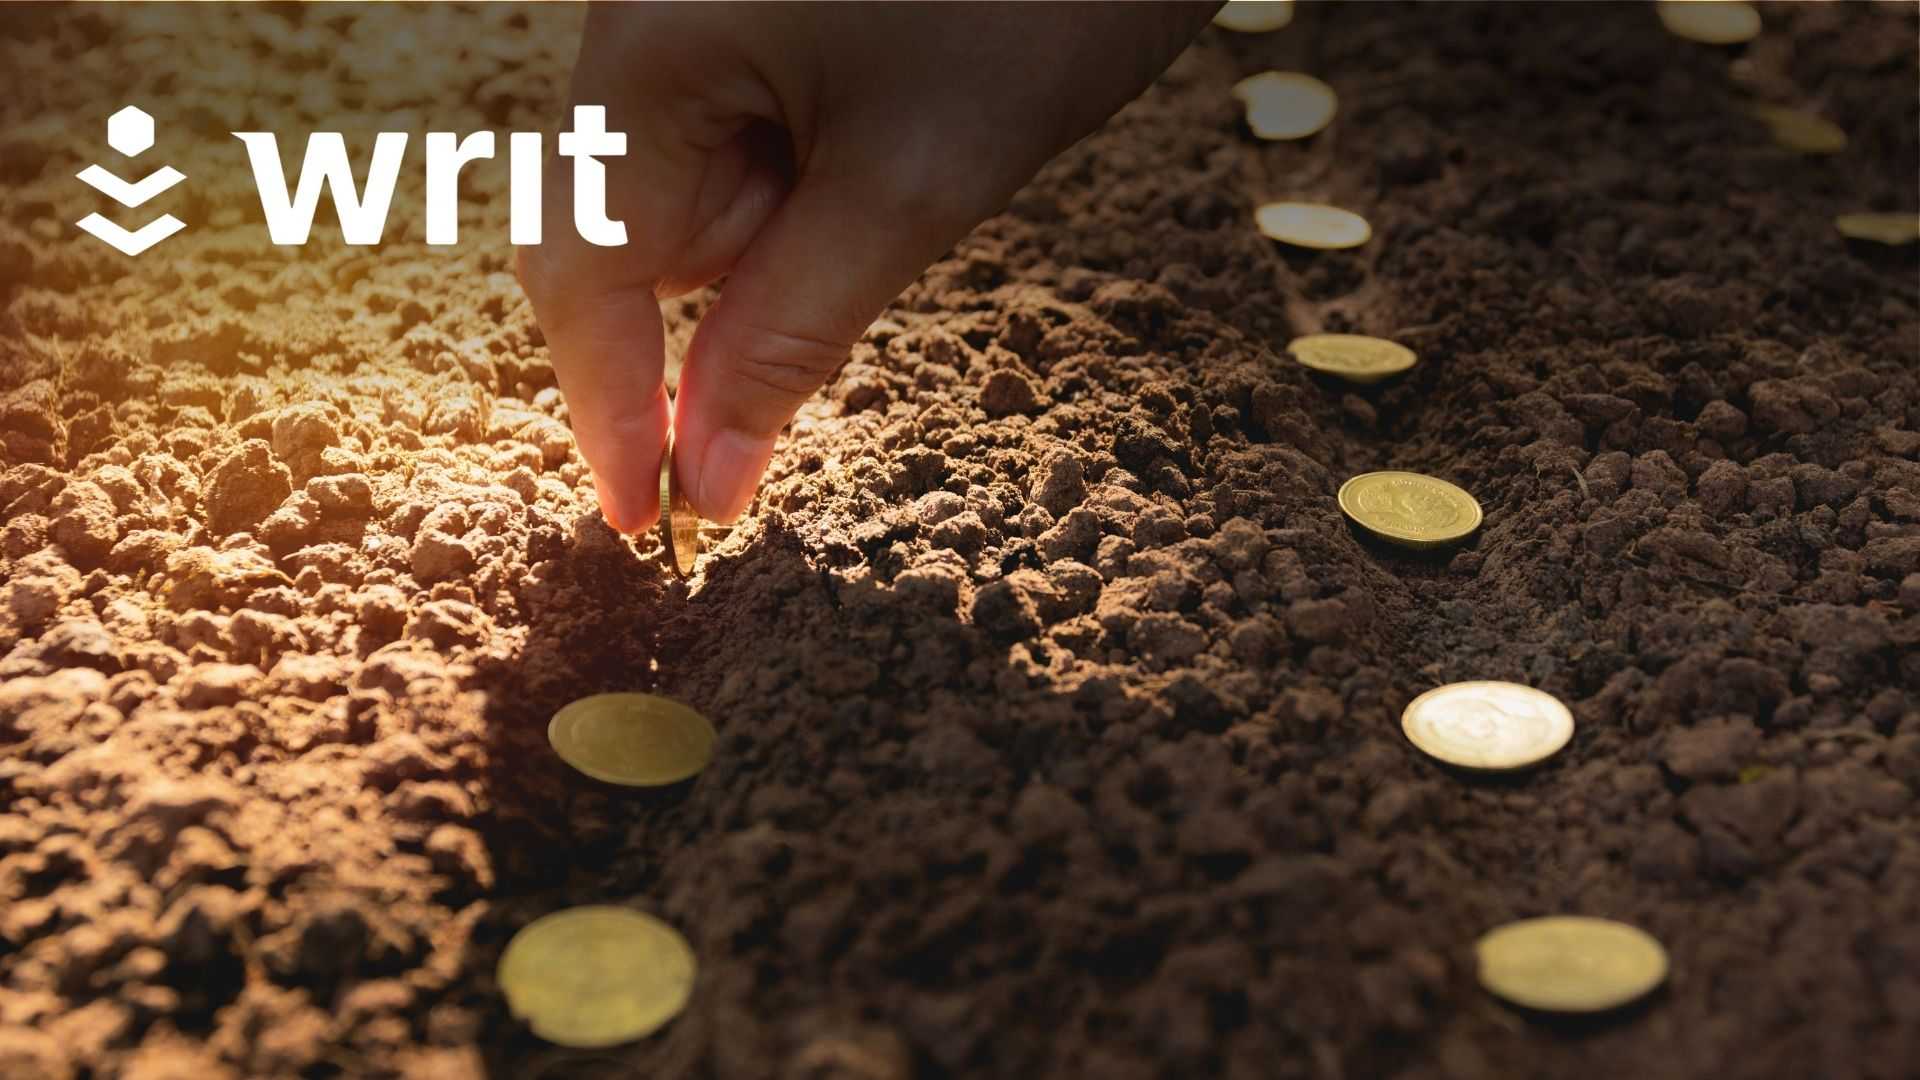 Writ Secures $3.8M in Series Seed Funding Led by Gradient Ventures